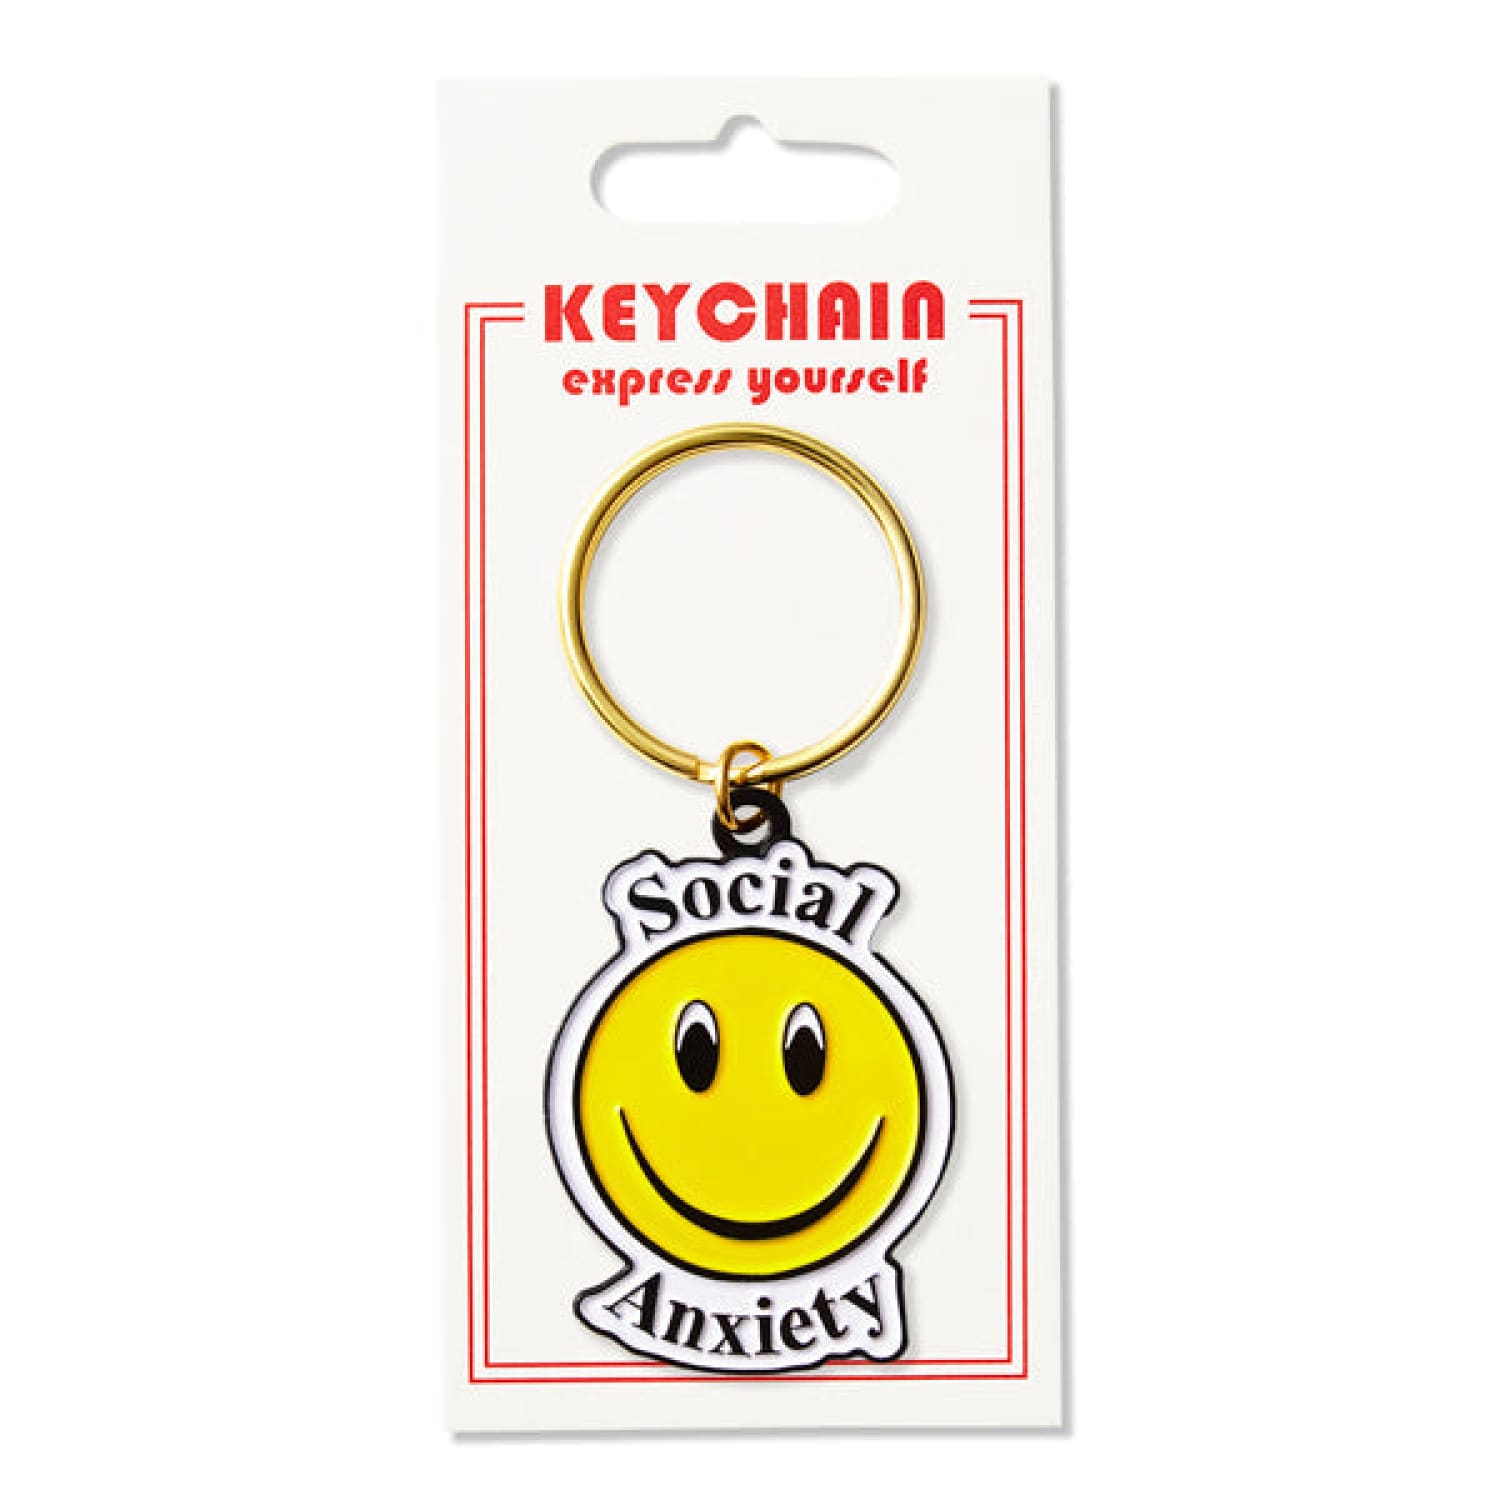 Social Anxiety Keychain Accessory - Anxiety - Keychain -